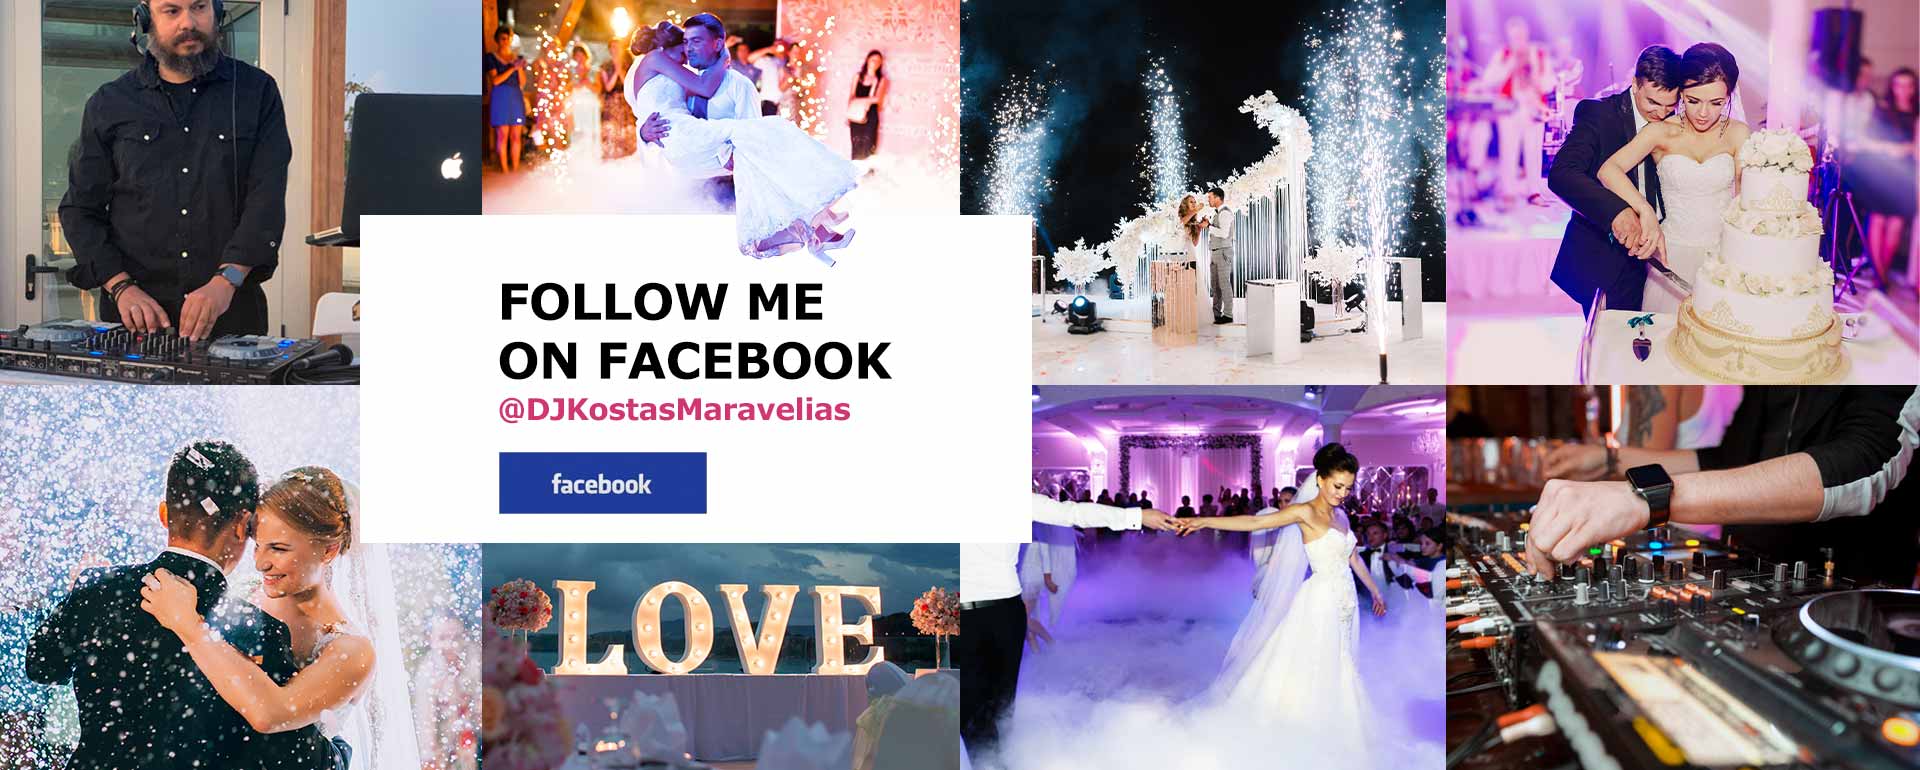 dj-rhodes-wedding-services-facebook--kostas-maravelias